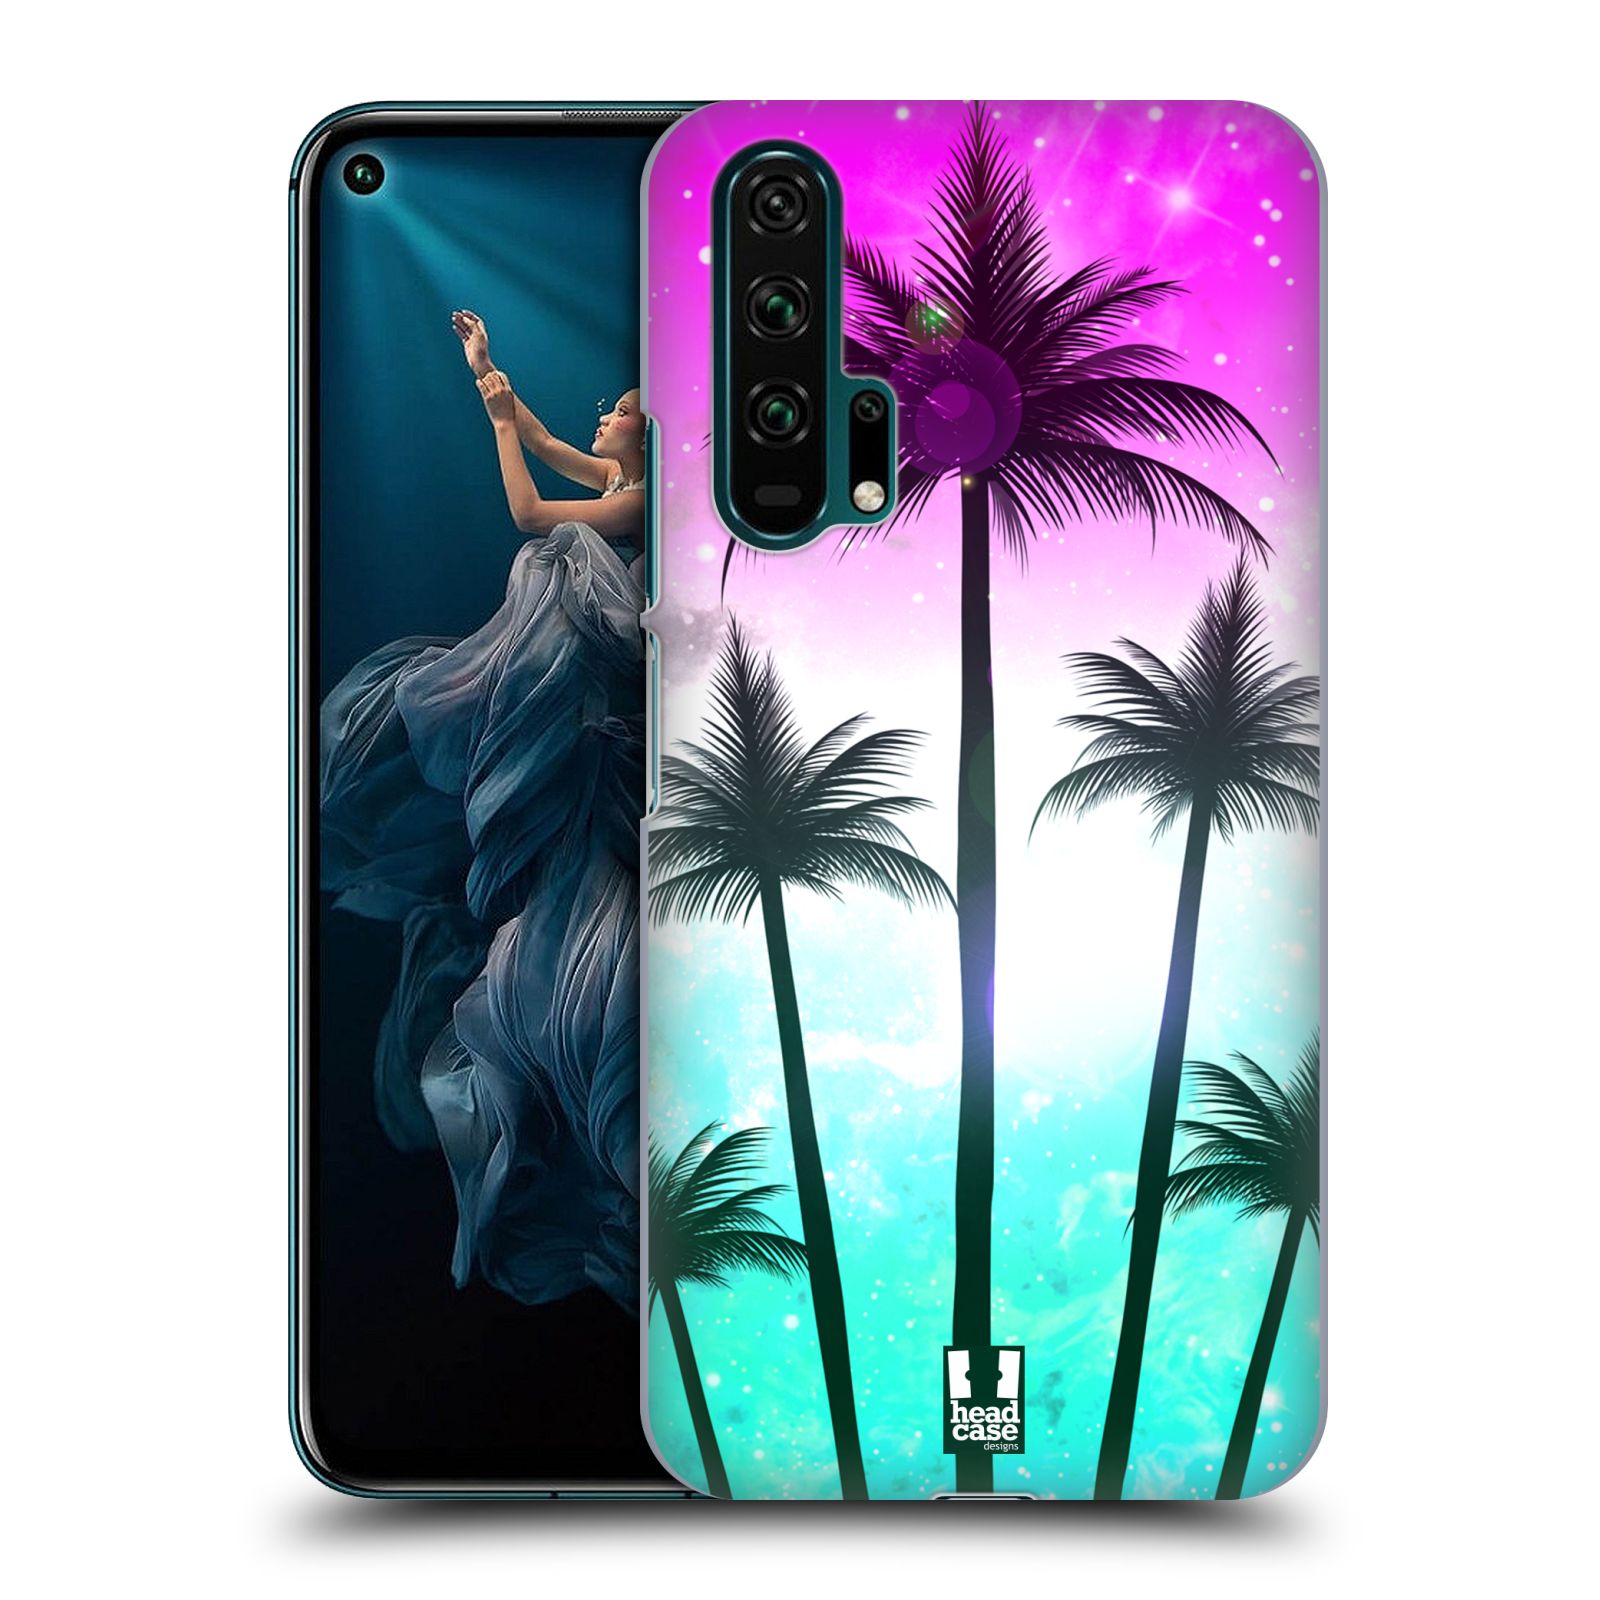 Pouzdro na mobil Honor 20 PRO - HEAD CASE - vzor Kreslený motiv silueta moře a palmy RŮŽOVÁ A TYRKYS